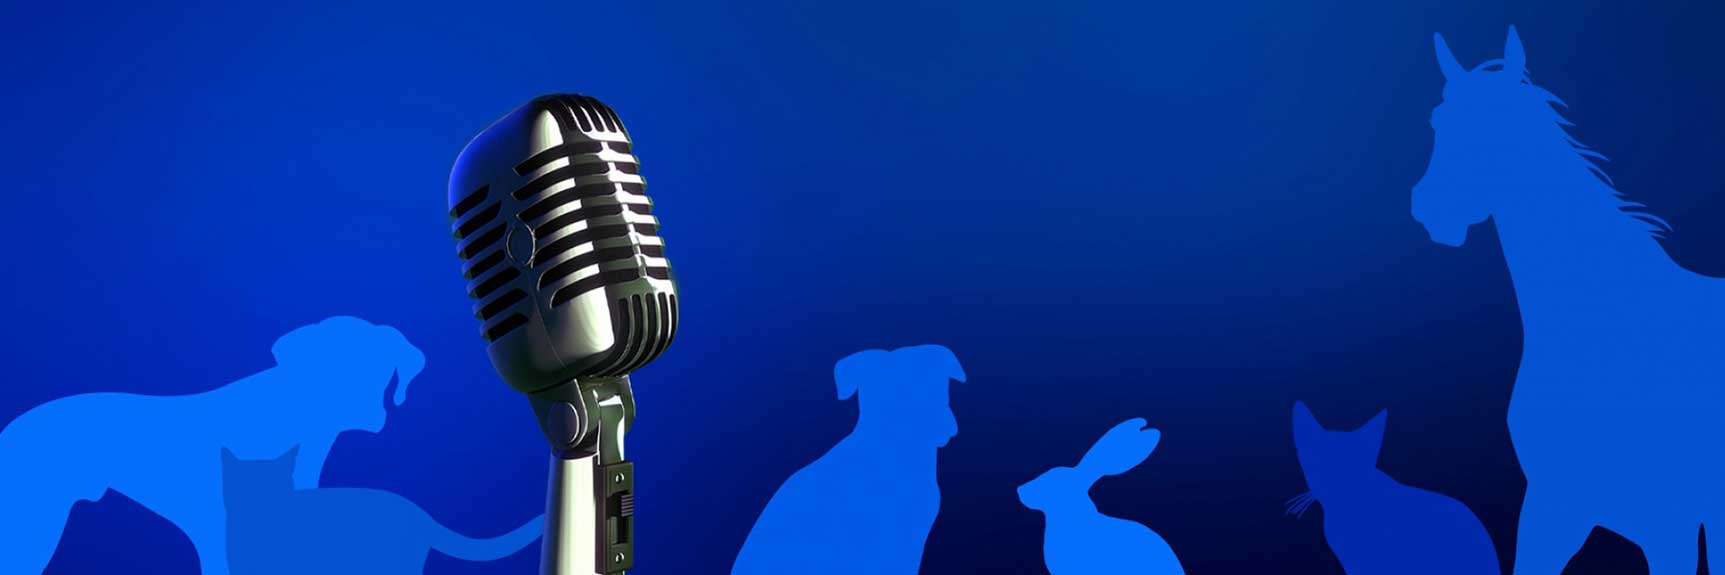 silhouettes d'animaux de compagnie avec microphone | Affiche Rock the House